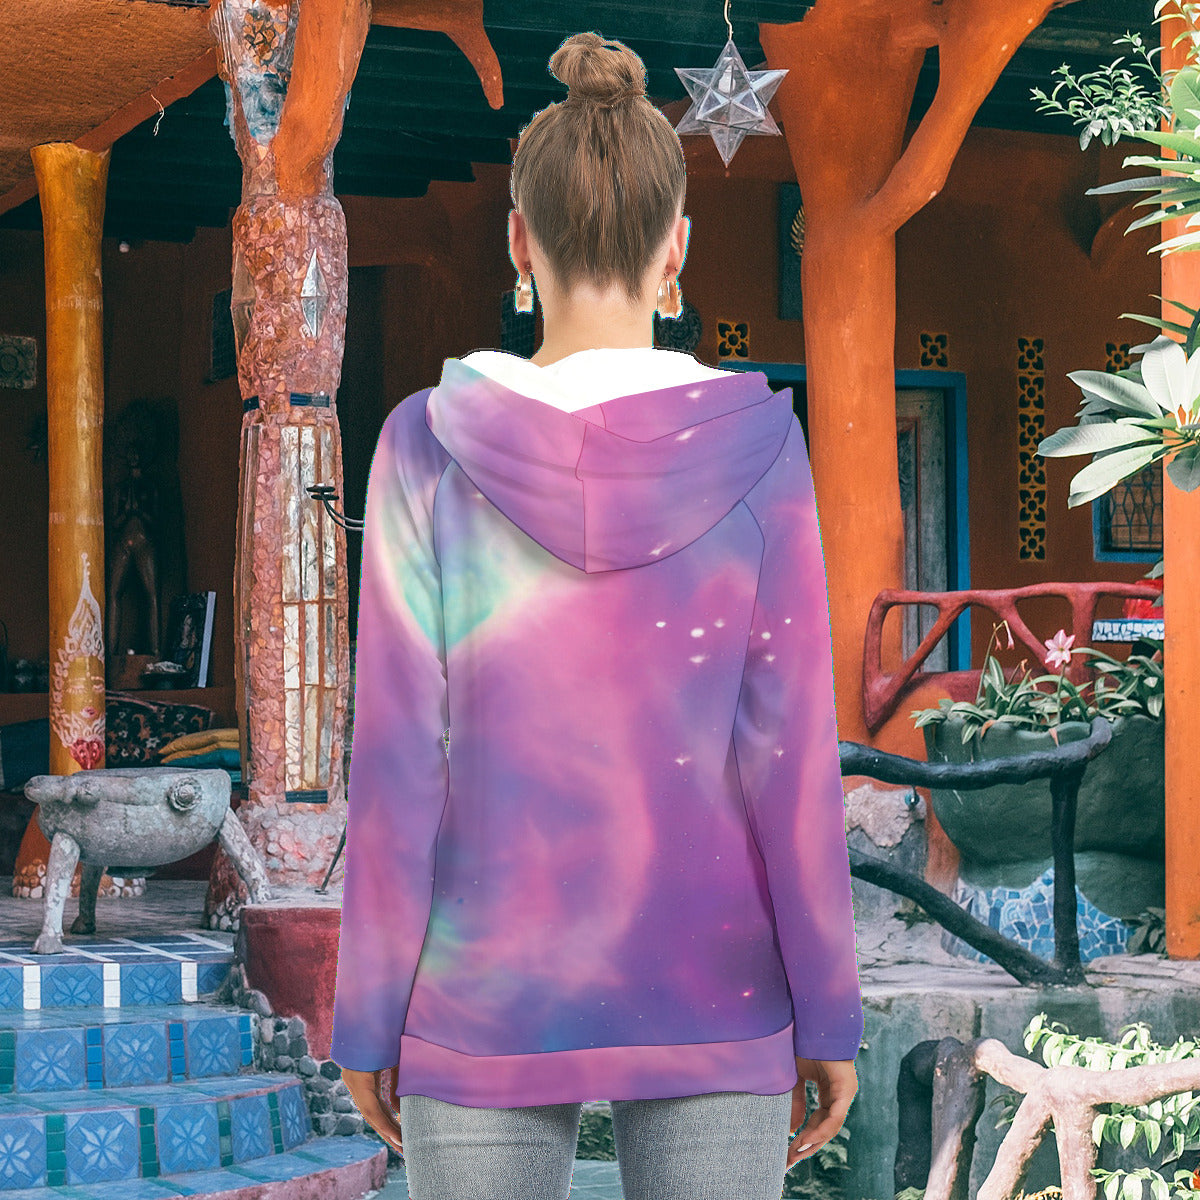 Vibrant Iridescent Nebula Galaxy All-Over Print Women's Hoodie with Zipper Pocket The Nebula Palace: Spiritually Cosmic Fashion